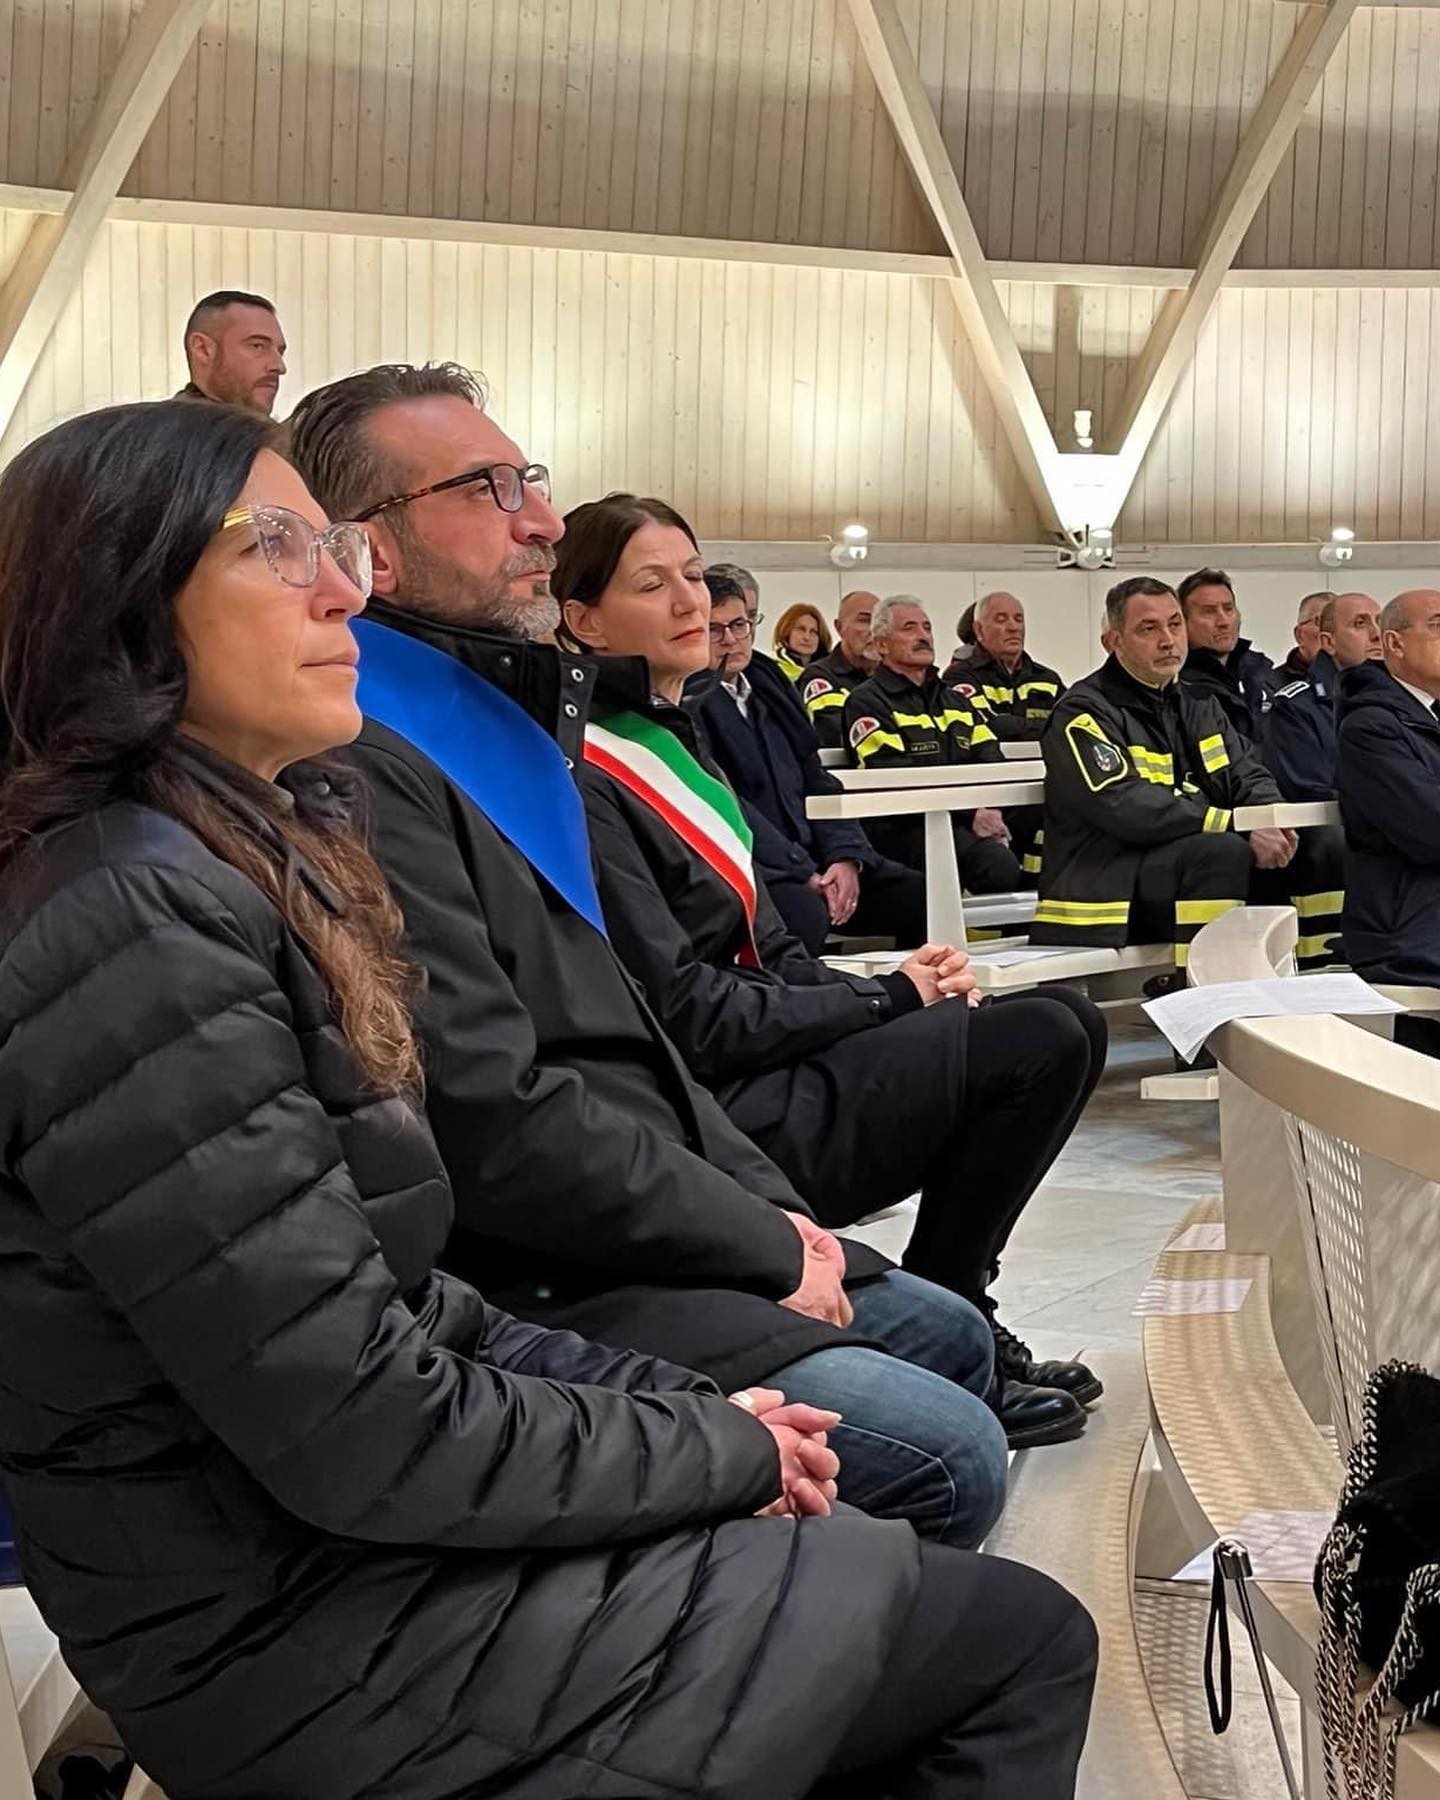 Santa Barbara a Varese, Brianza: “Viva i vigili del fuoco”